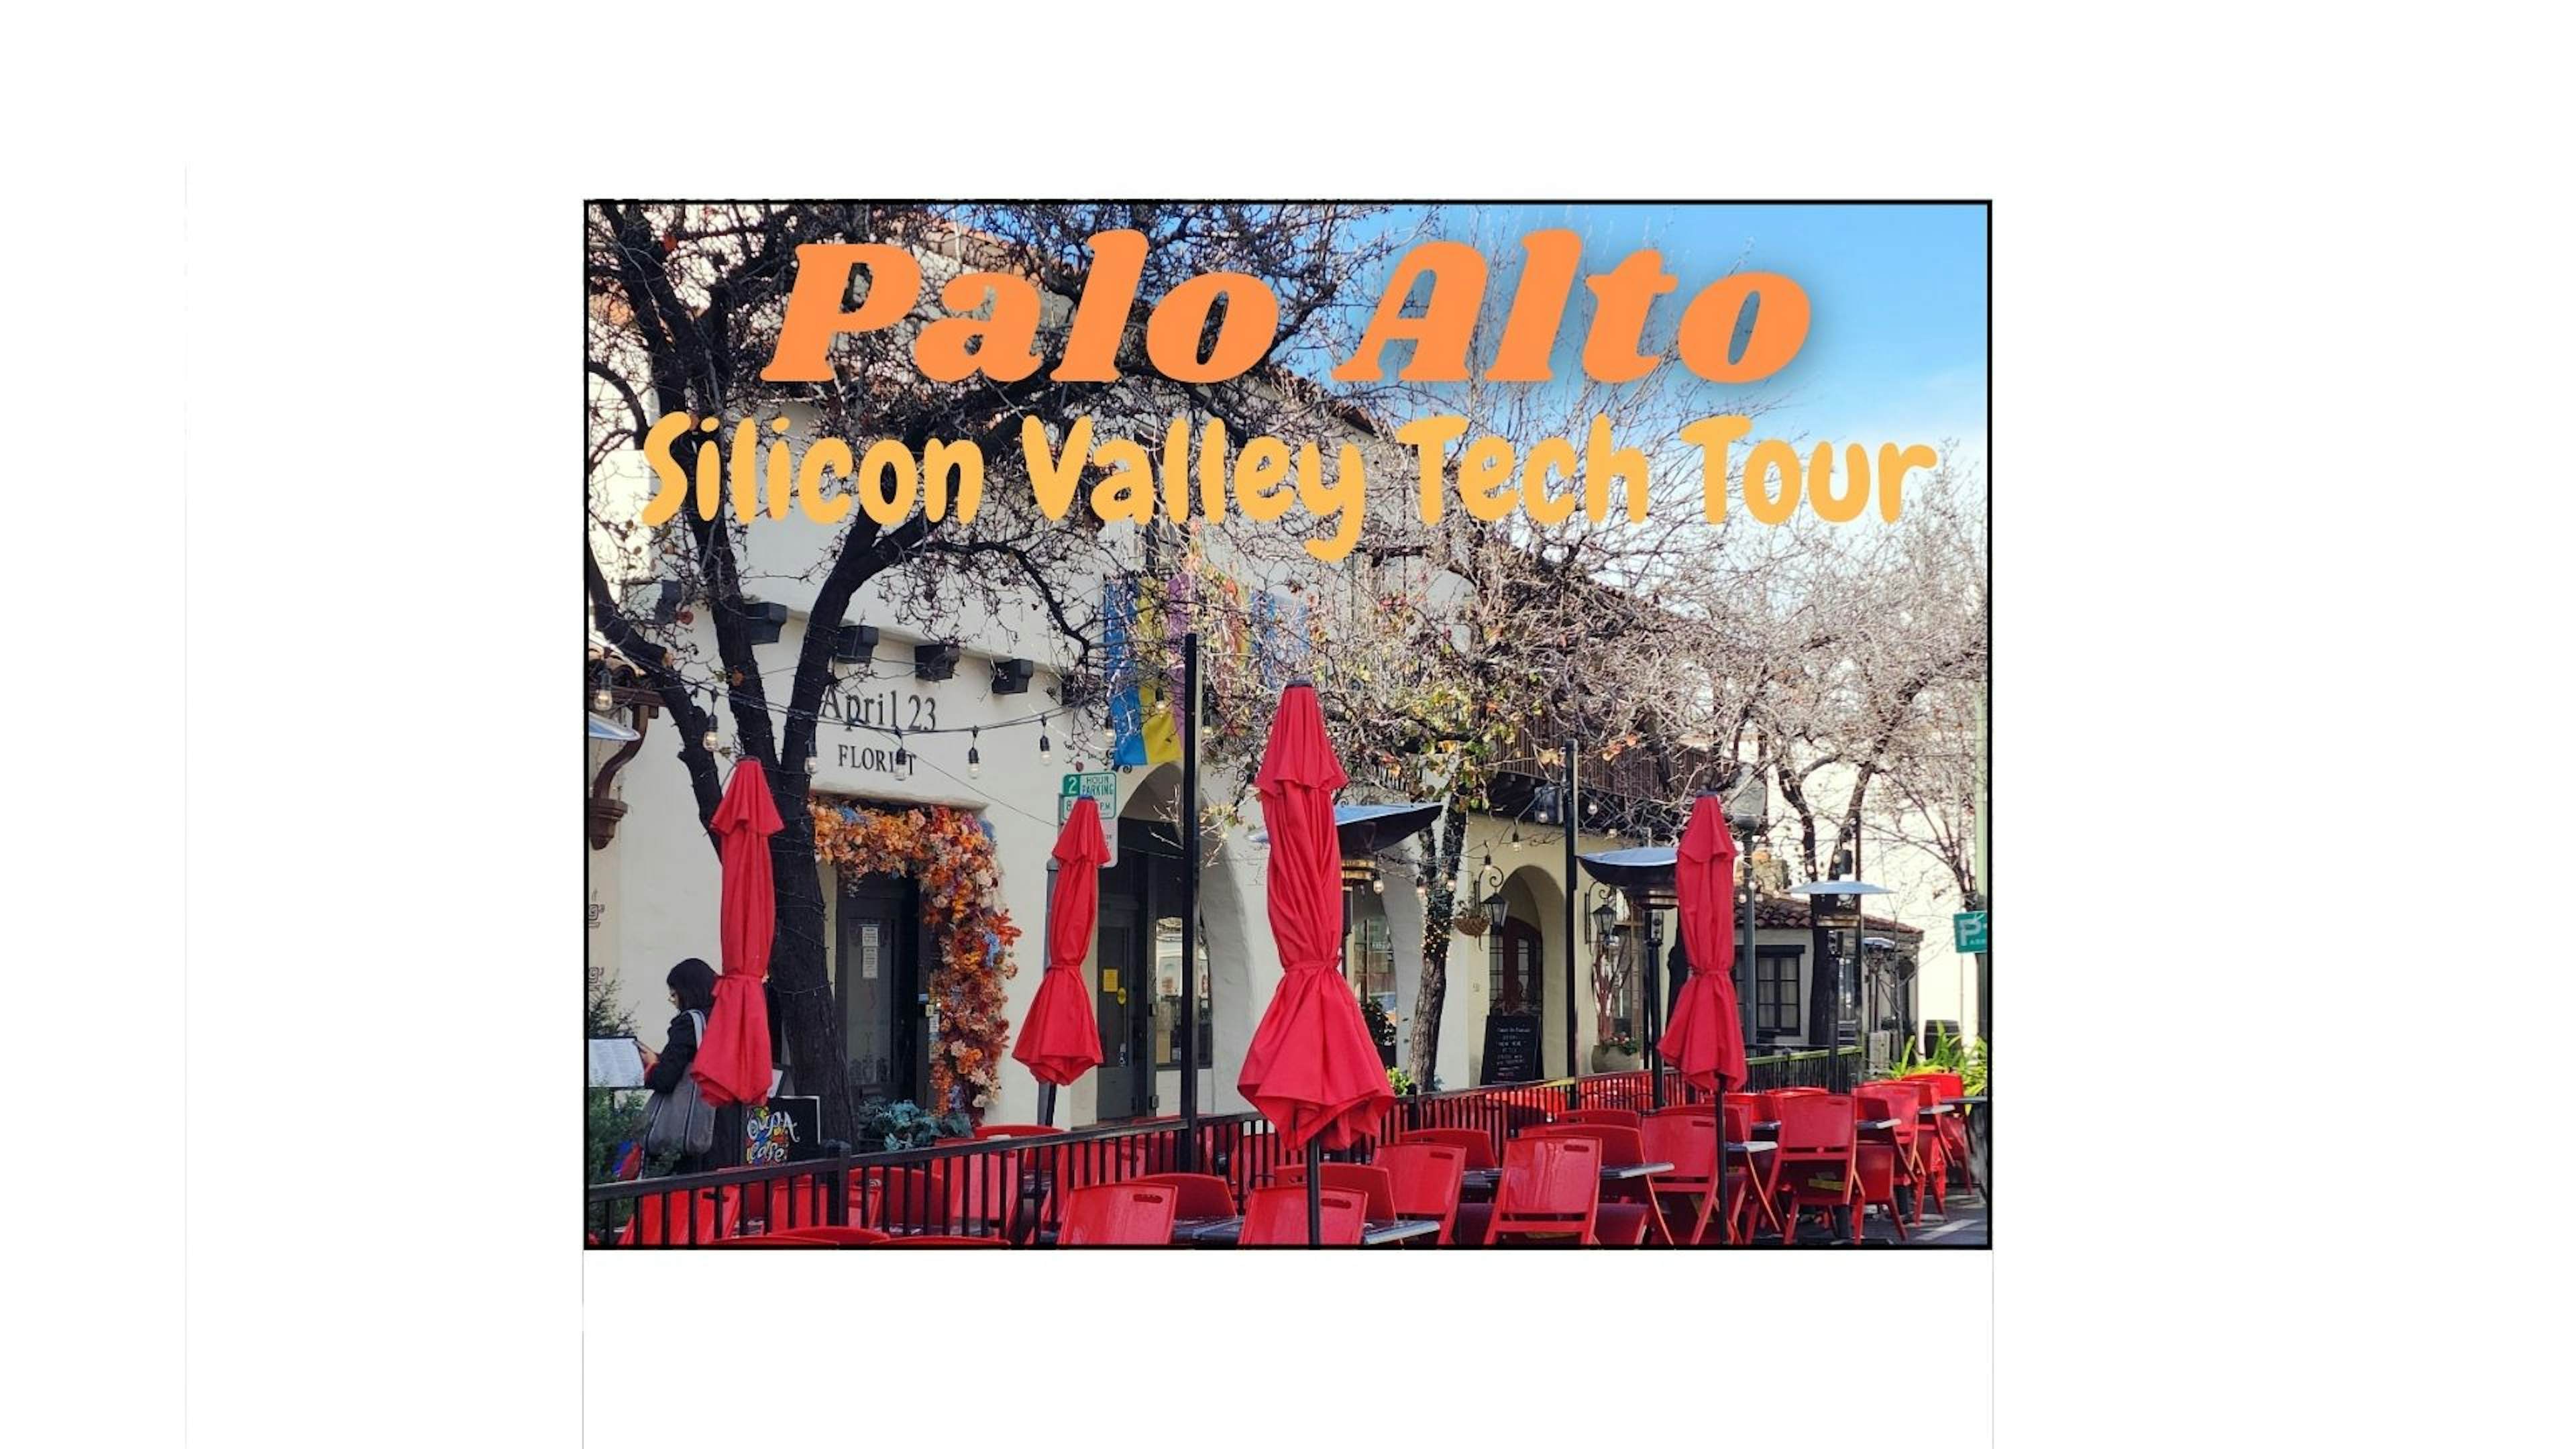 Palo Alto Downtown: Silicon Valley Tech Culture